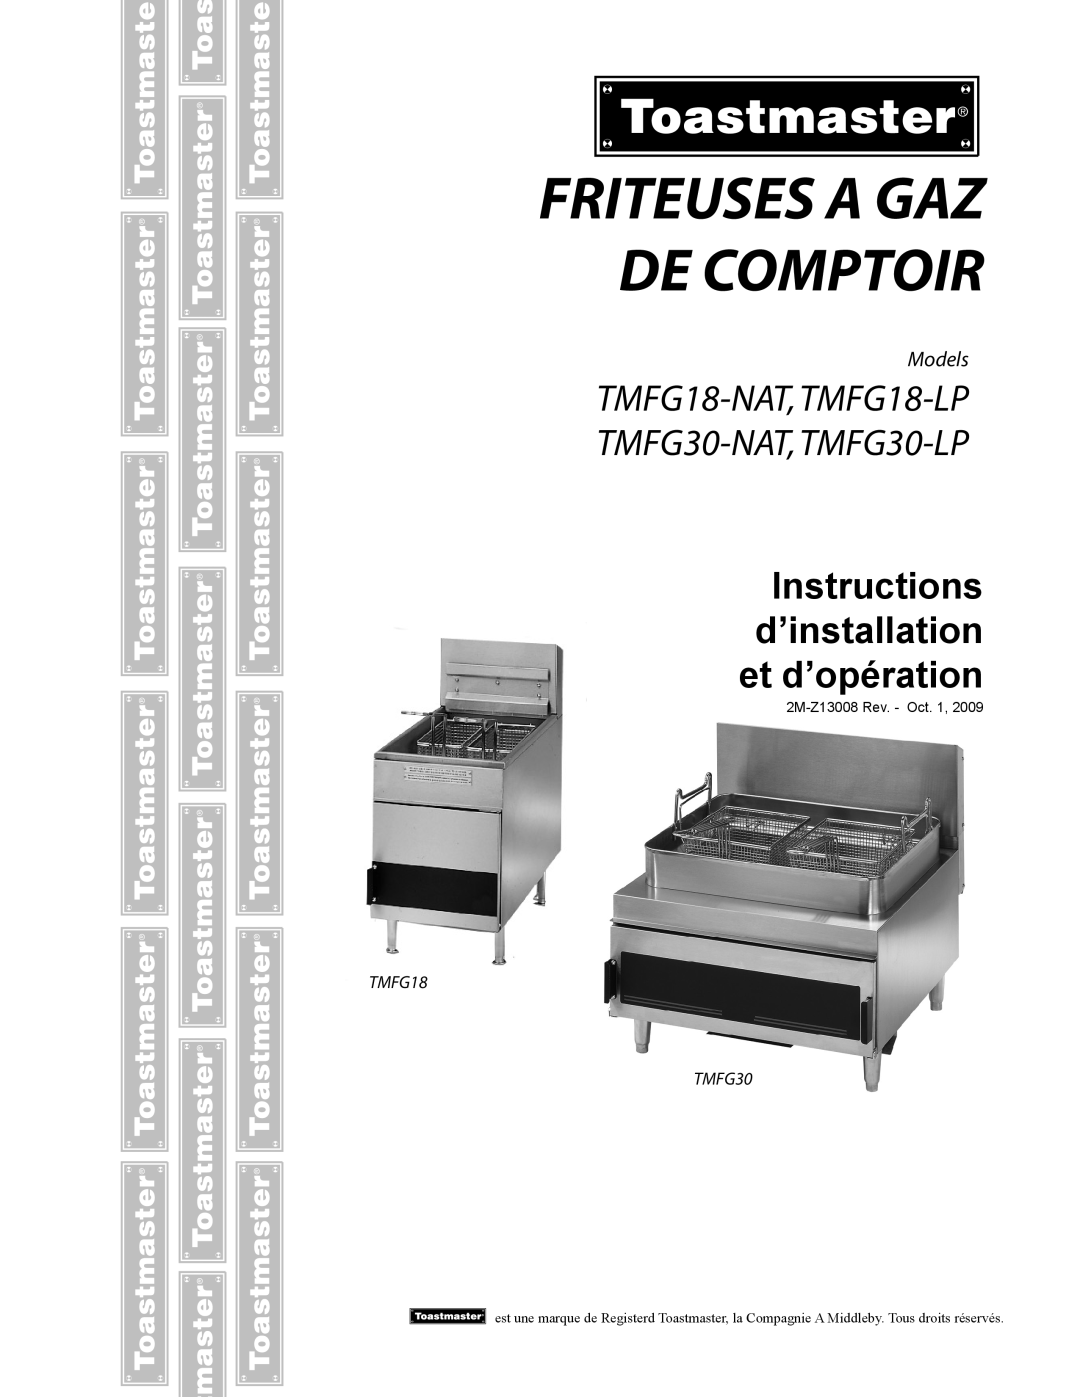 Toastmaster TMFG30-NAT Friteuses A Gaz De Comptoir, Instructions d’installation et d’opération, Models, TMFG18 TMFG30 